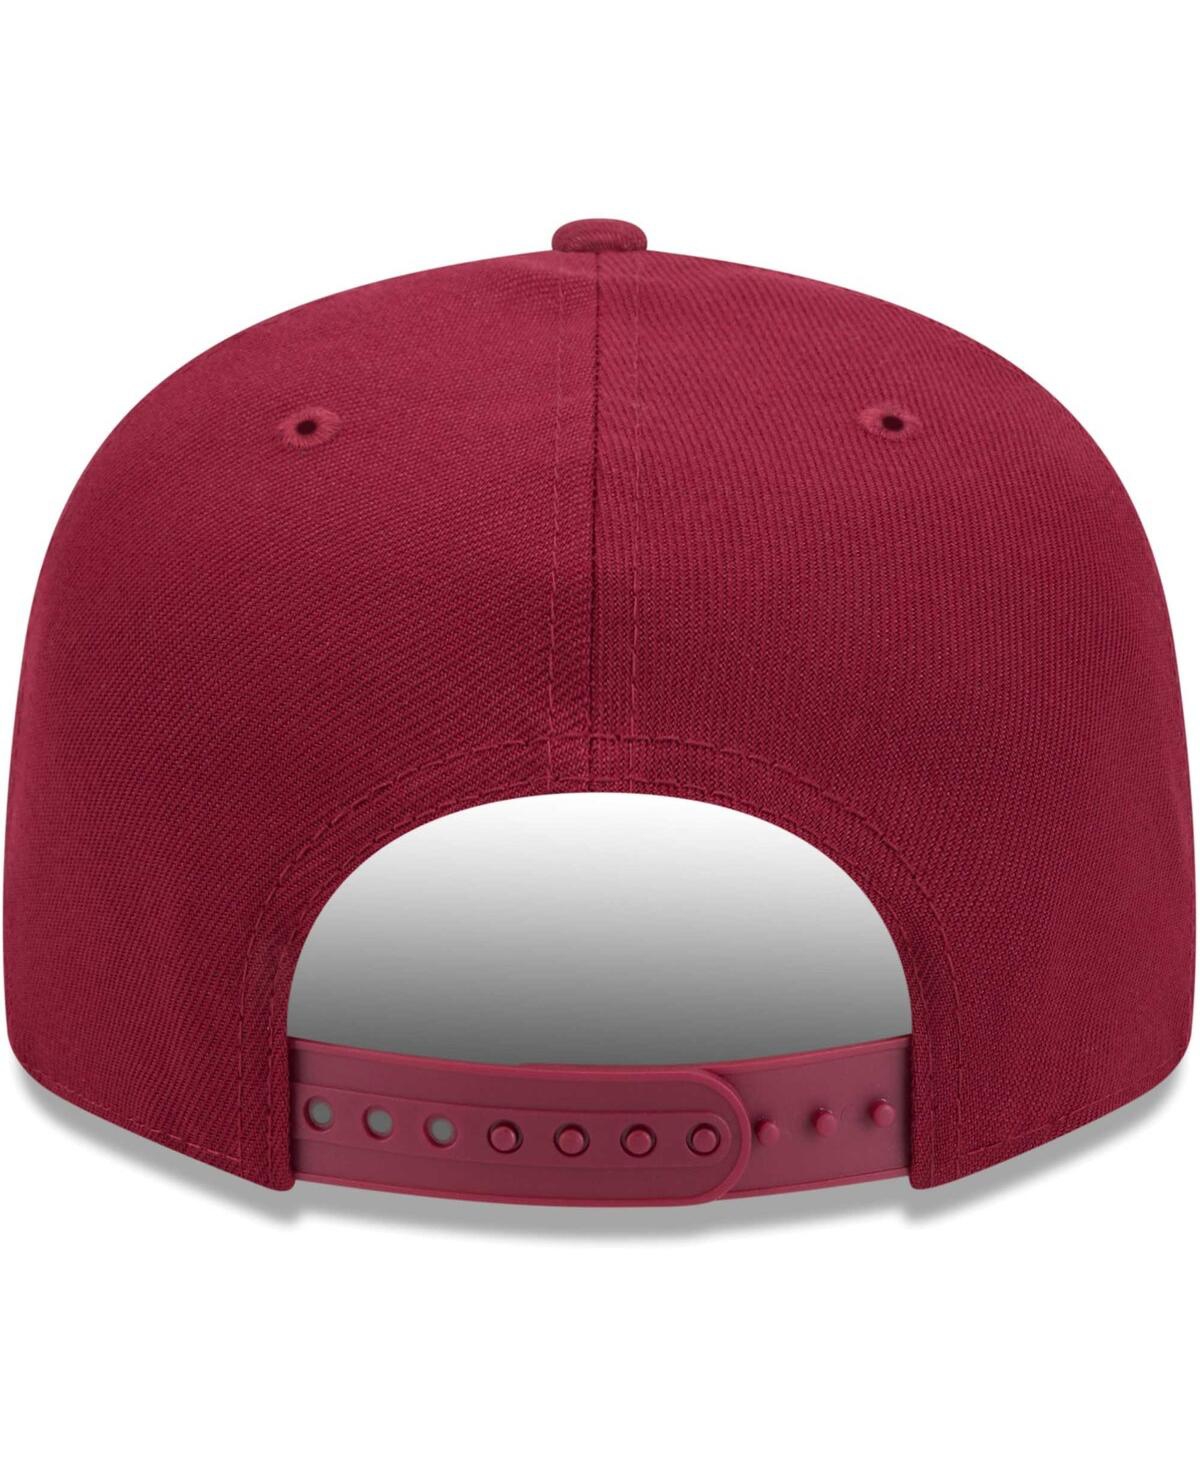 Shop New Era Men's Burgundy Washington Commanders Independent 9fifty Snapback Hat